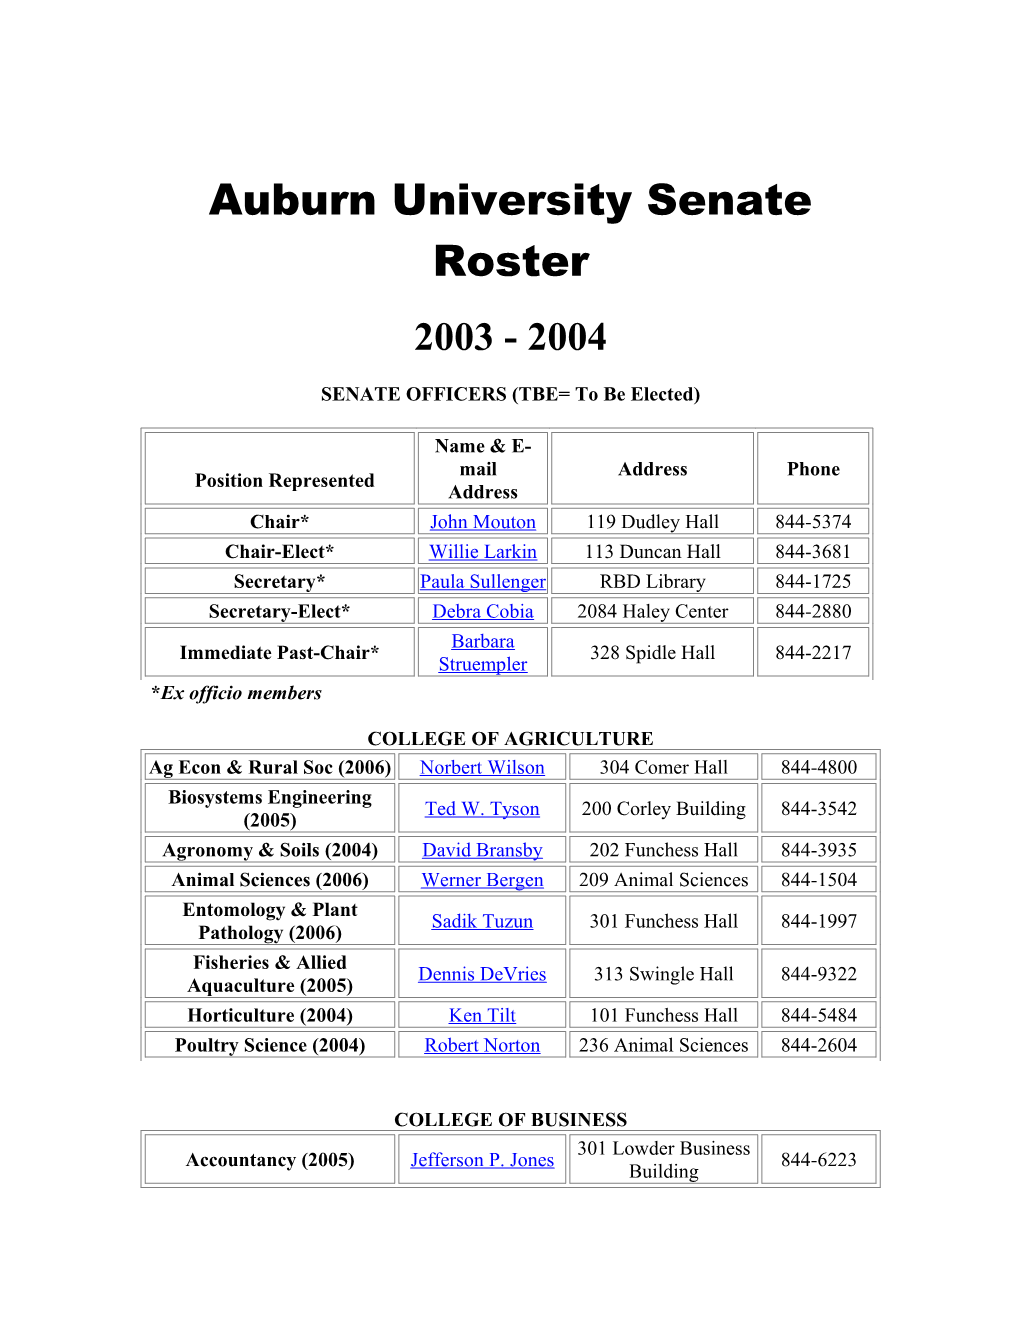 AU Senate Roster